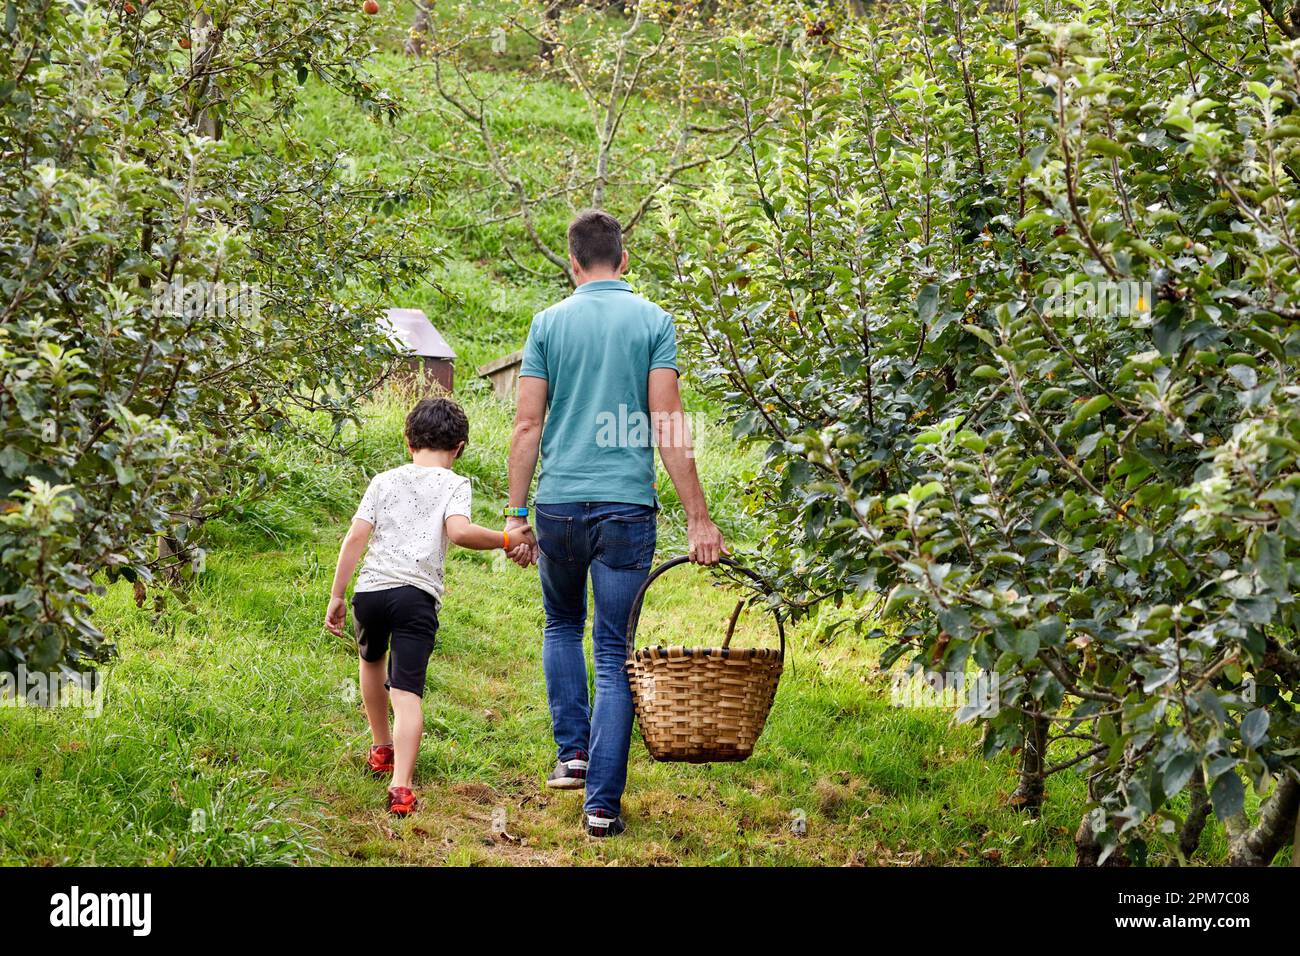 Padre e figlio che raccolgono mele per fare sidro, Sagardoetxea - Basque Cider Museum, Astigarraga, vicino Donostia, San Sebastian, Pais Vasco, Spagna Foto Stock